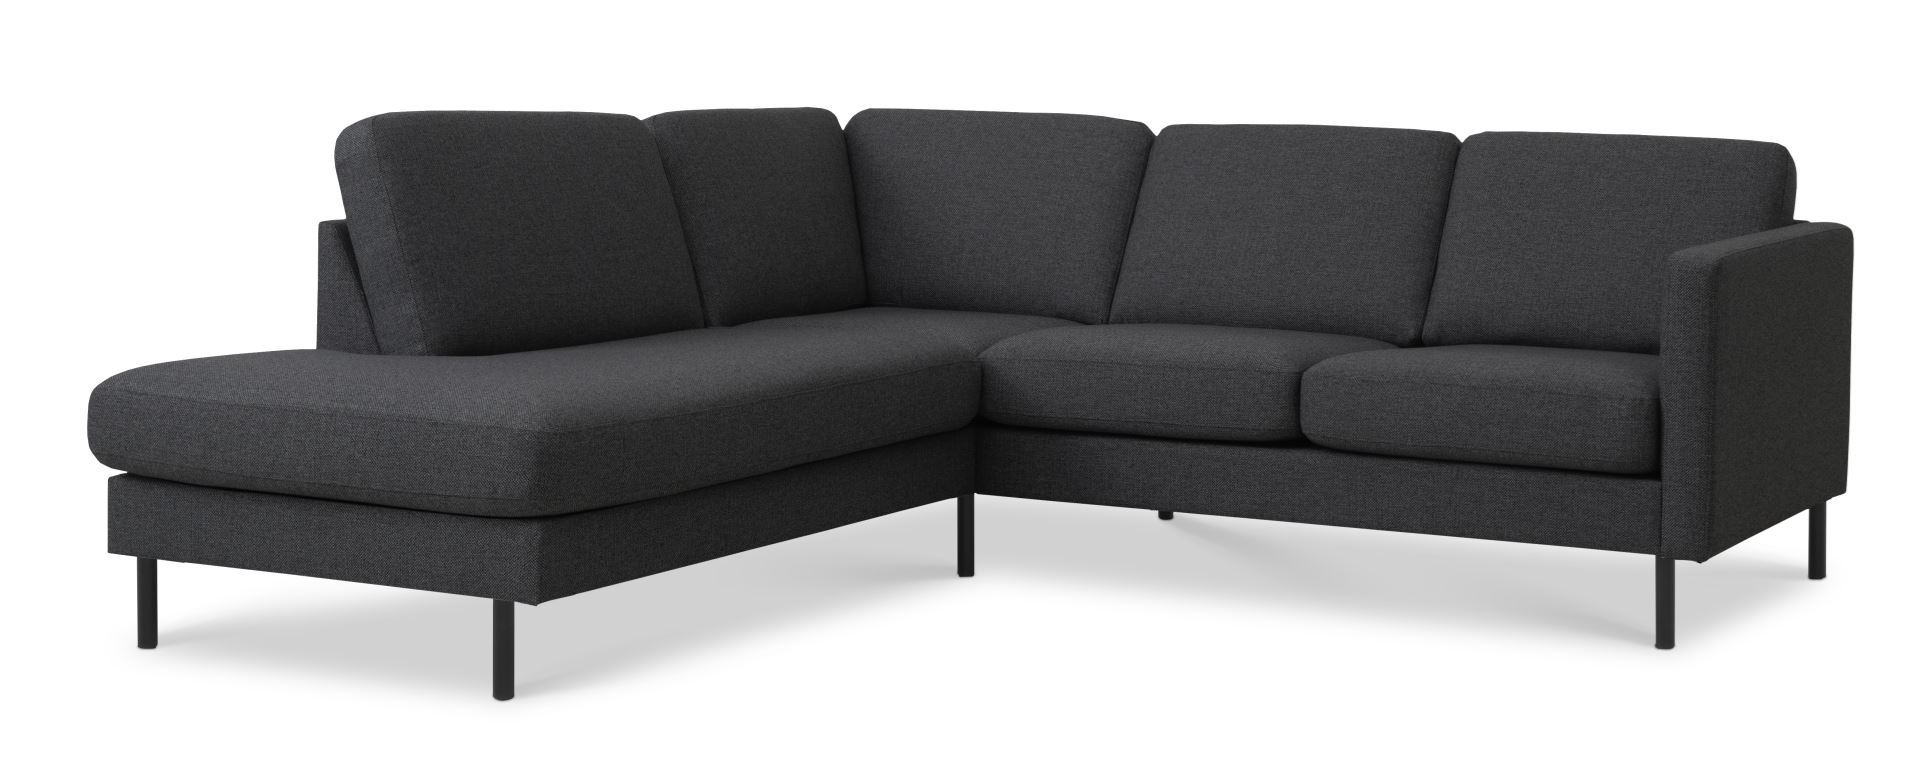 Ask sæt 52 lille OE sofa, m. venstre chaiselong - antracitgrå polyester stof og sort metal